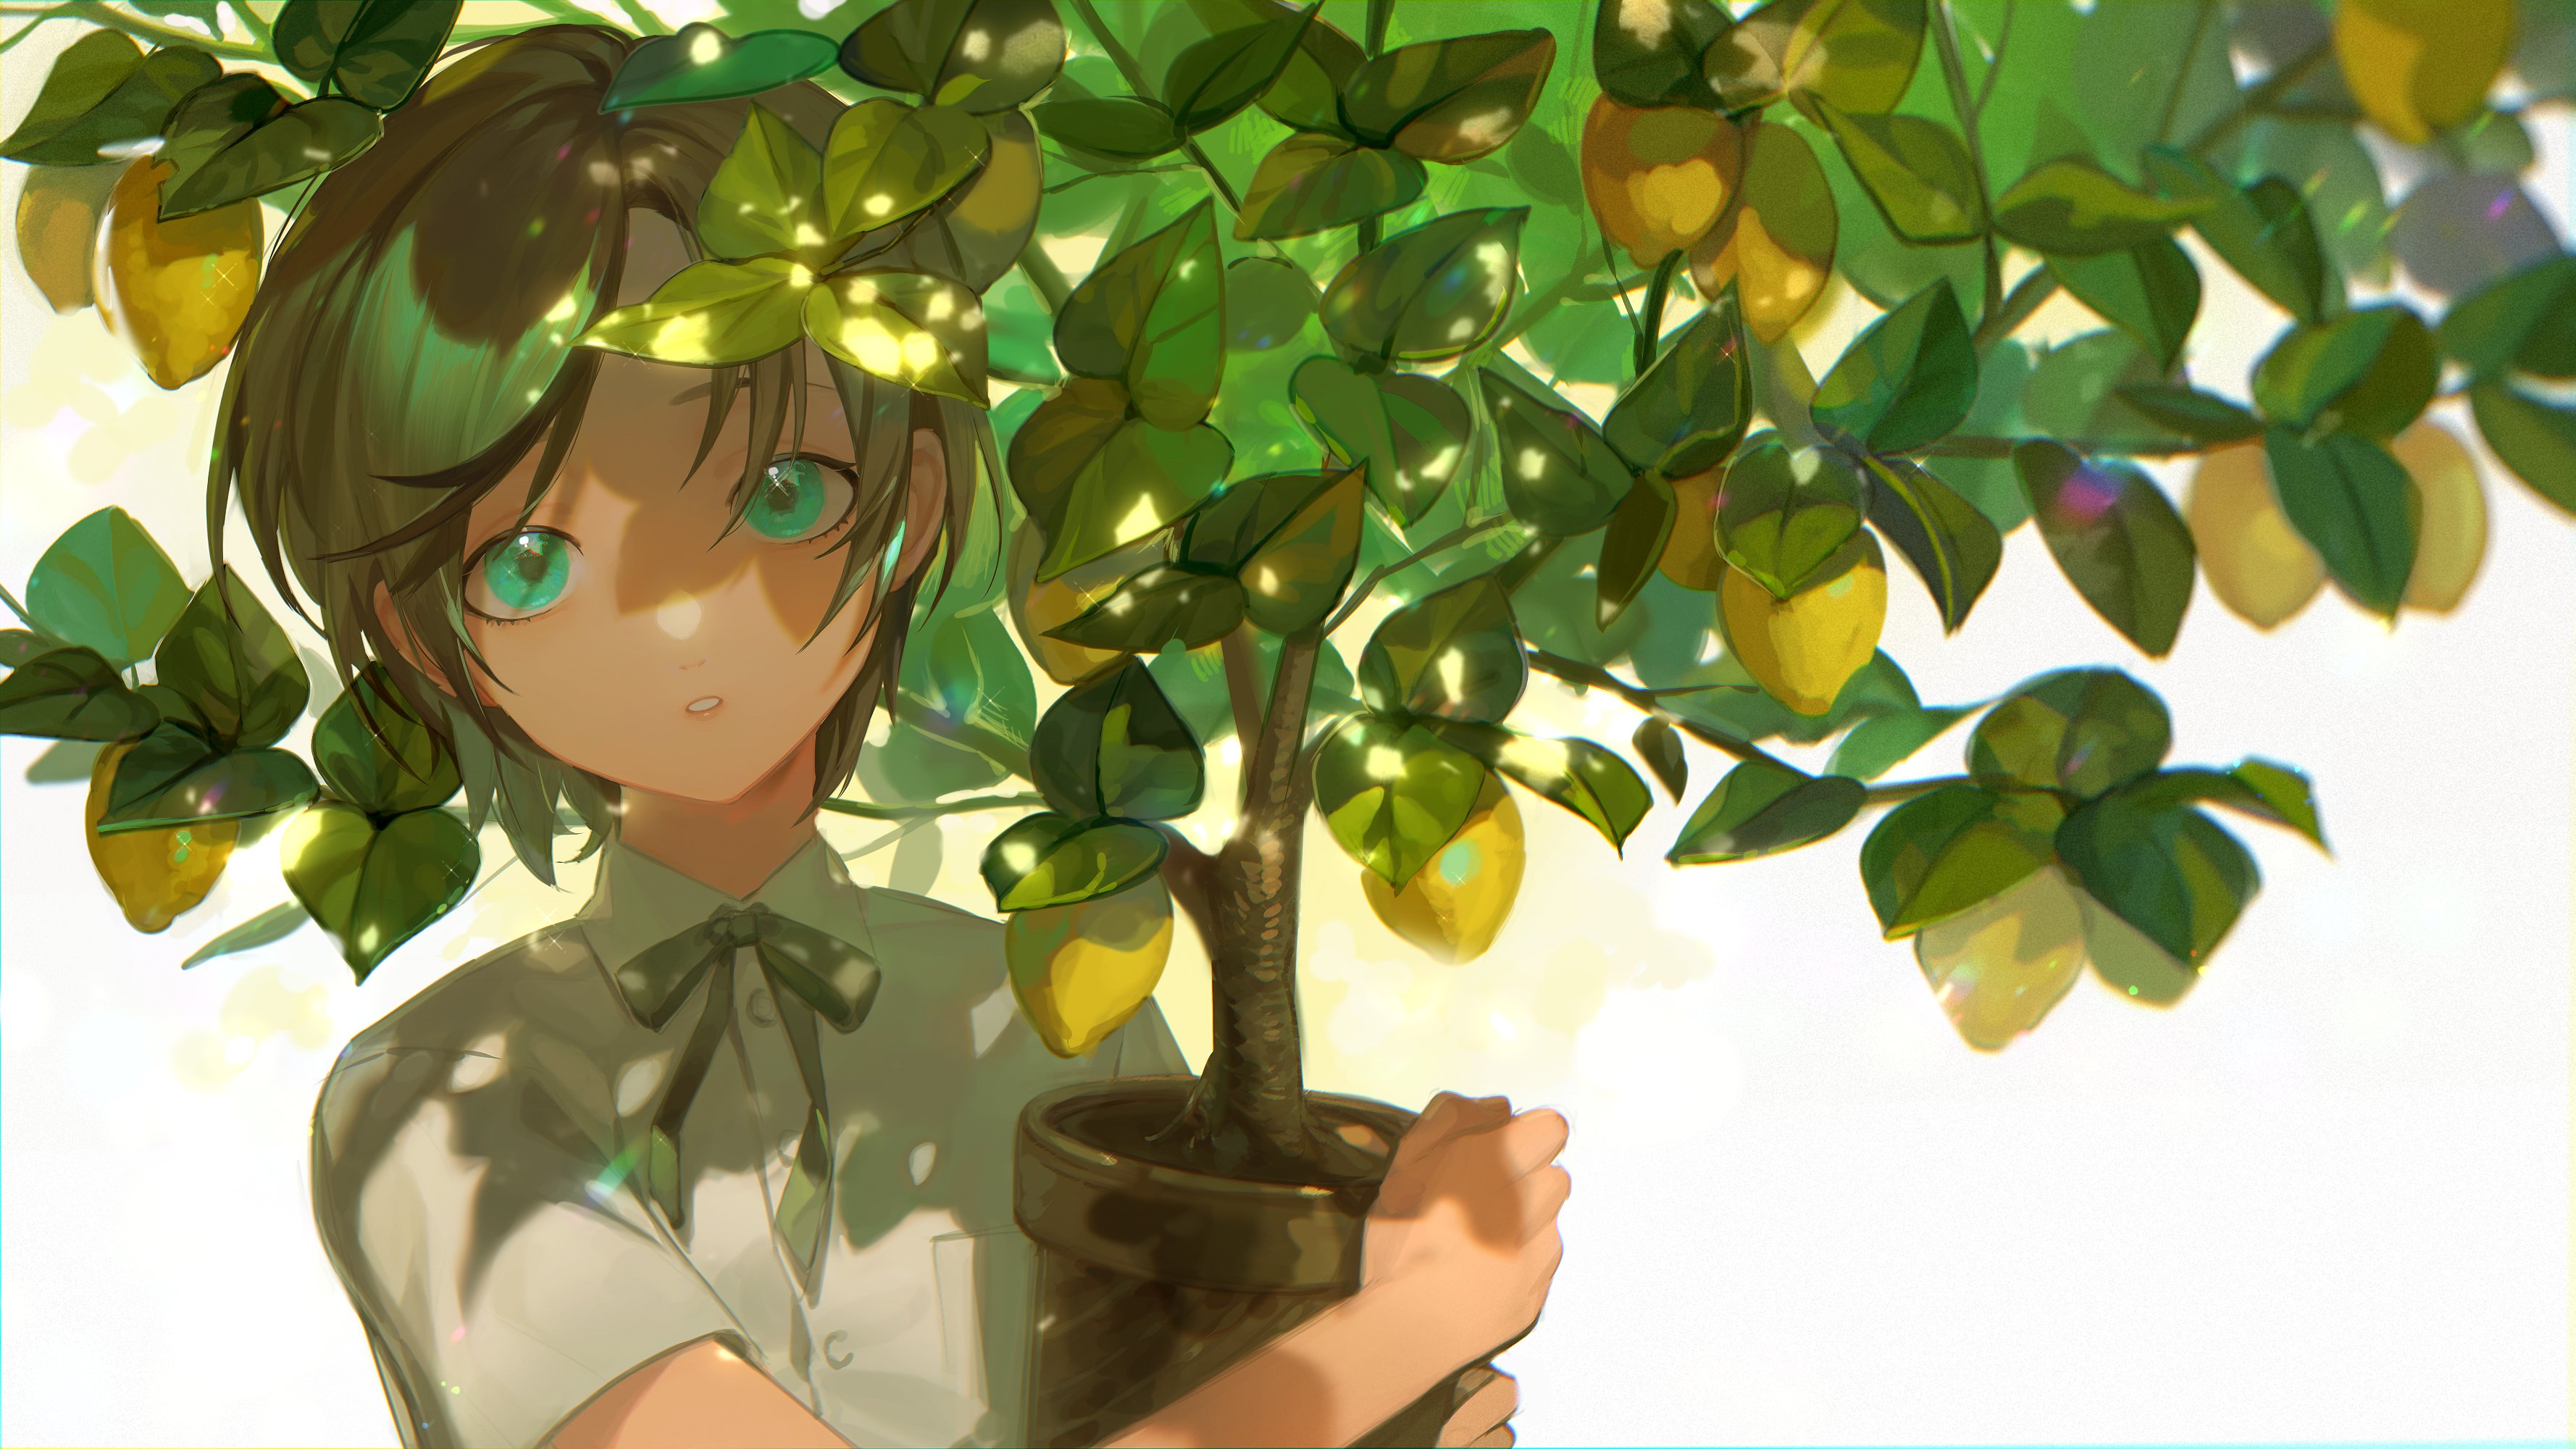 Anime Anime Girls Short Hair Green Eyes Flowerpot Shirt White Background Lemons Looking At Viewer 3556x2000